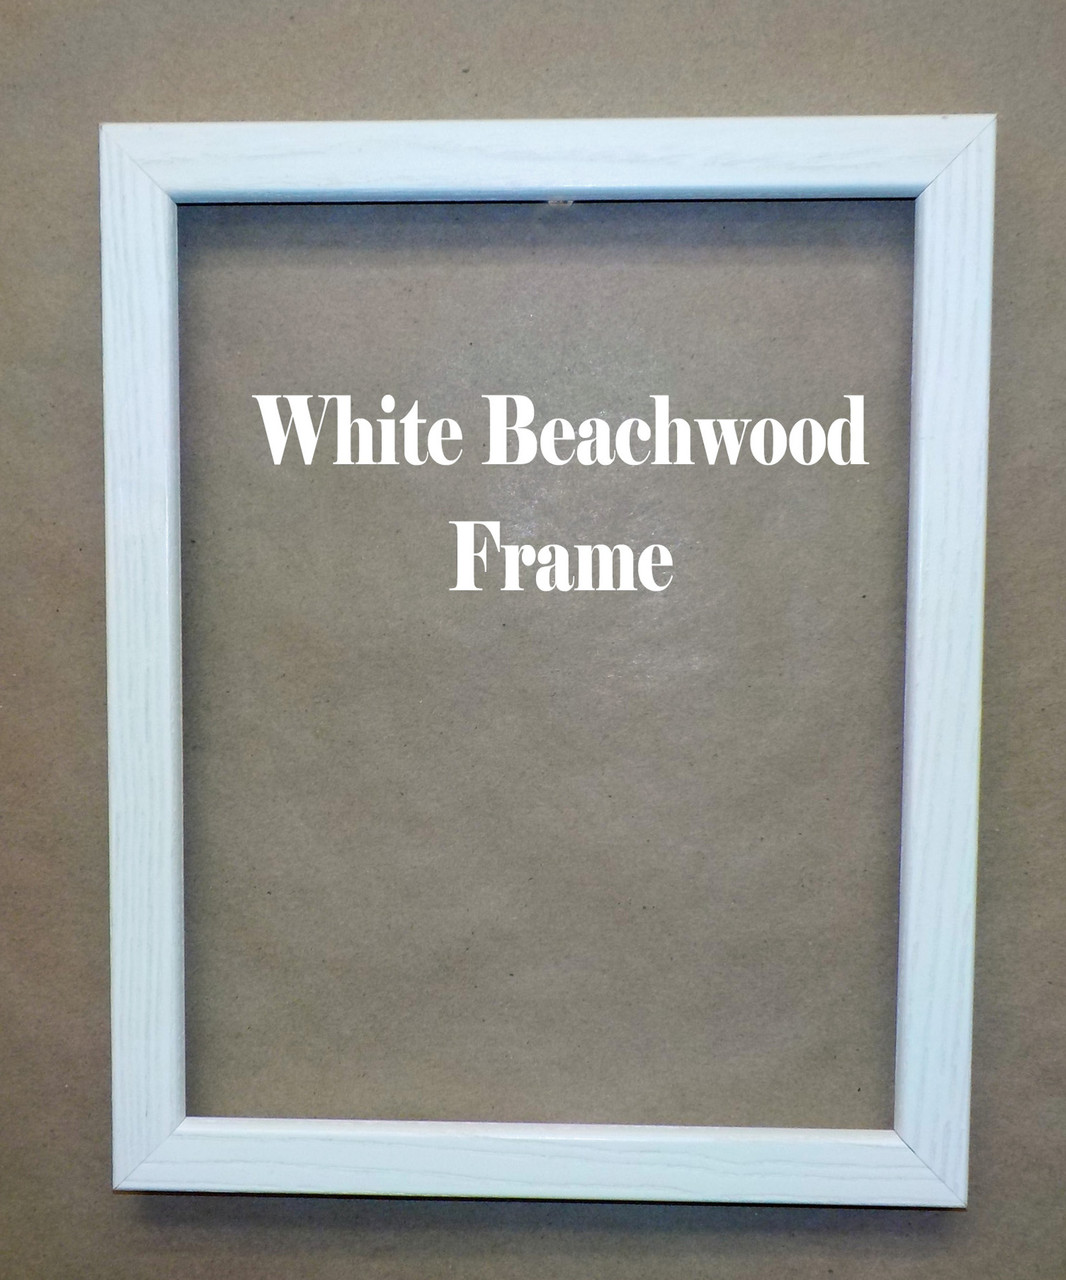  8" x 10" White Beachwood Picture Frame